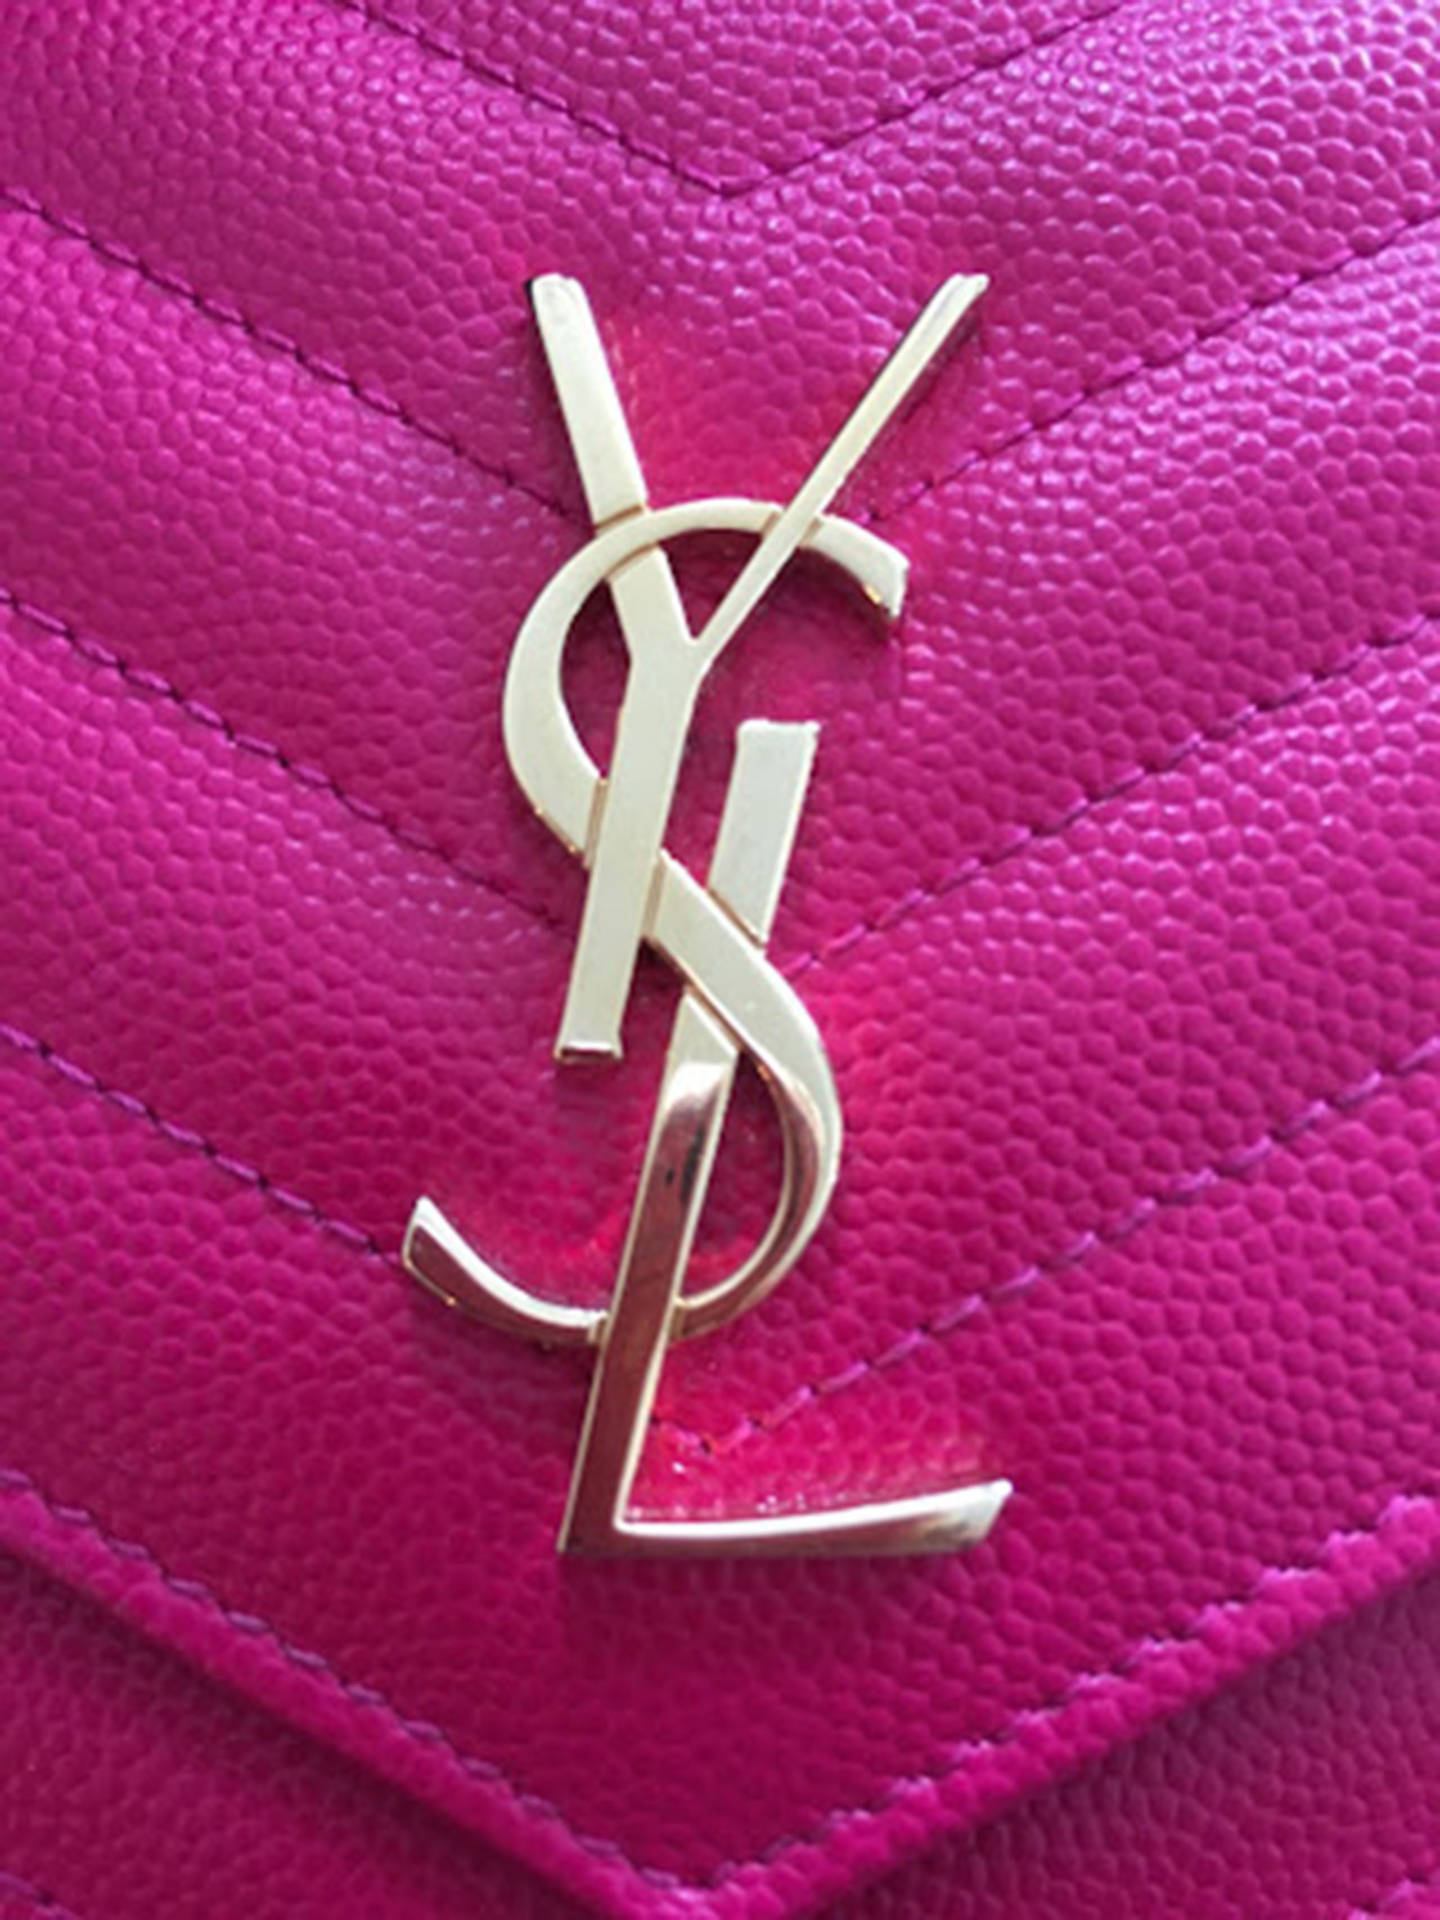 Ysl Logo In Pink Purse